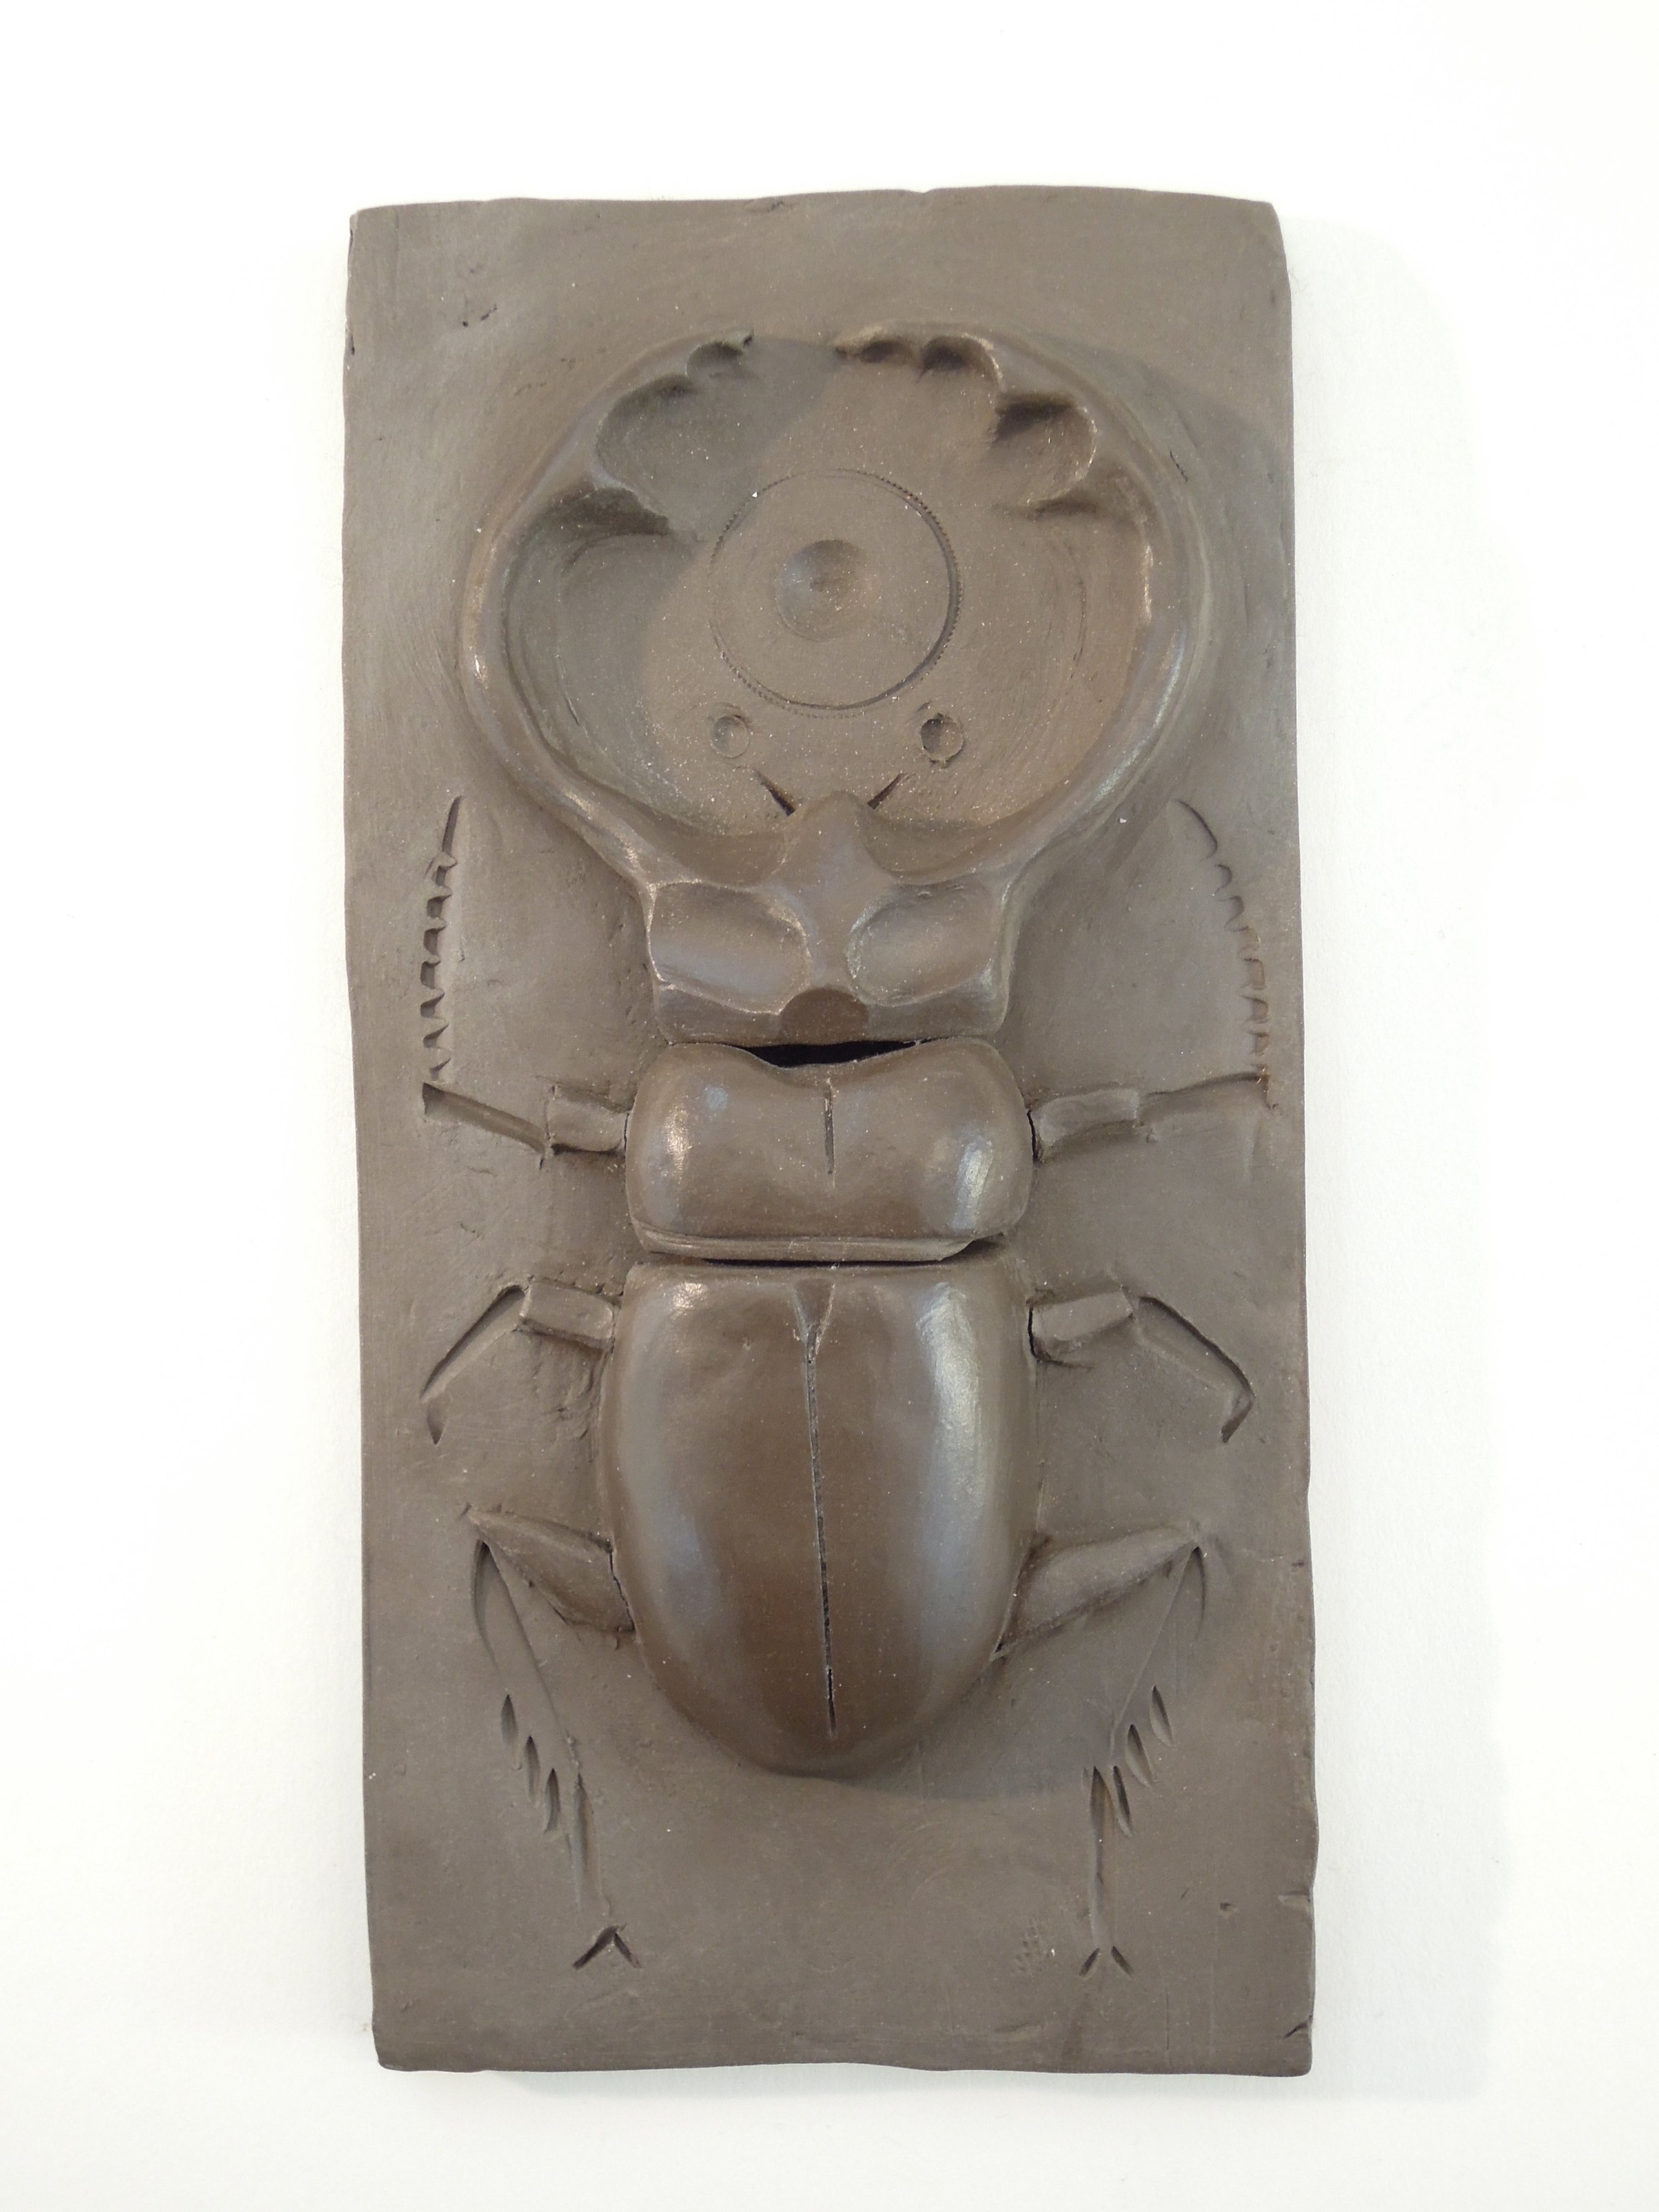   Staghorn Beetle   terracotta 3.5" x 7" 2017  